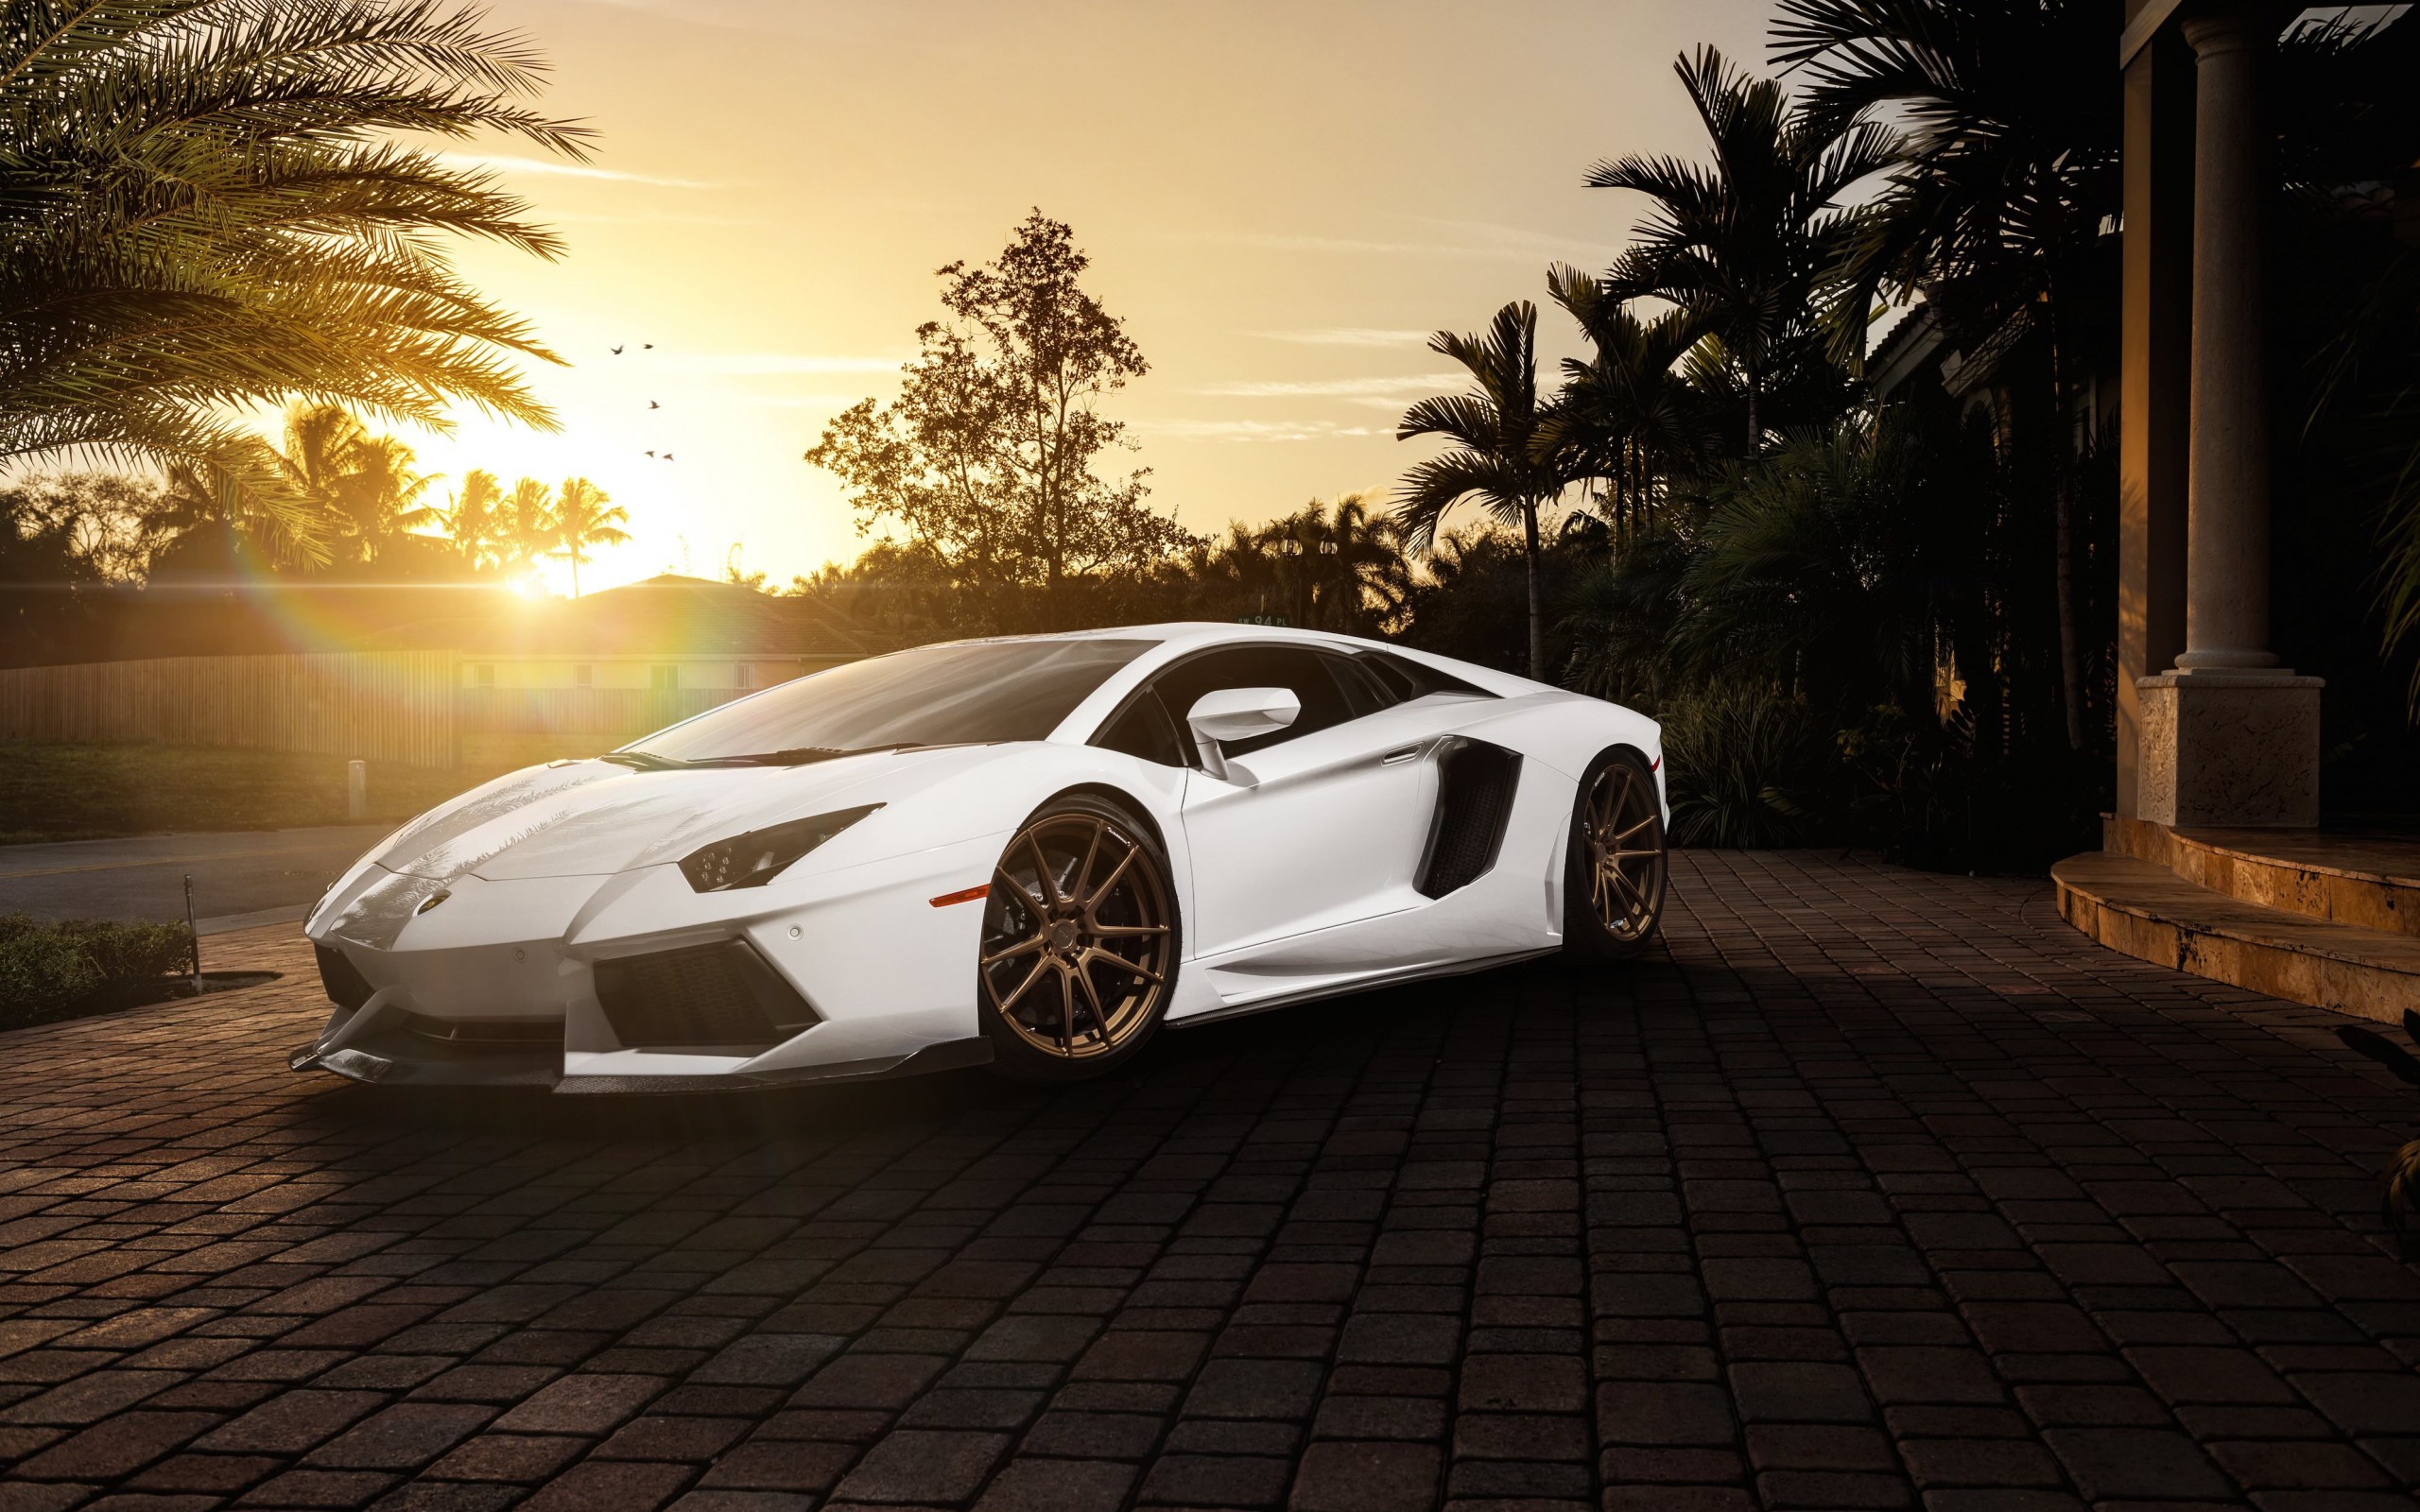 Lamborghini Aventador LP700-4 in White Wallpaper for Desktop 2560x1600